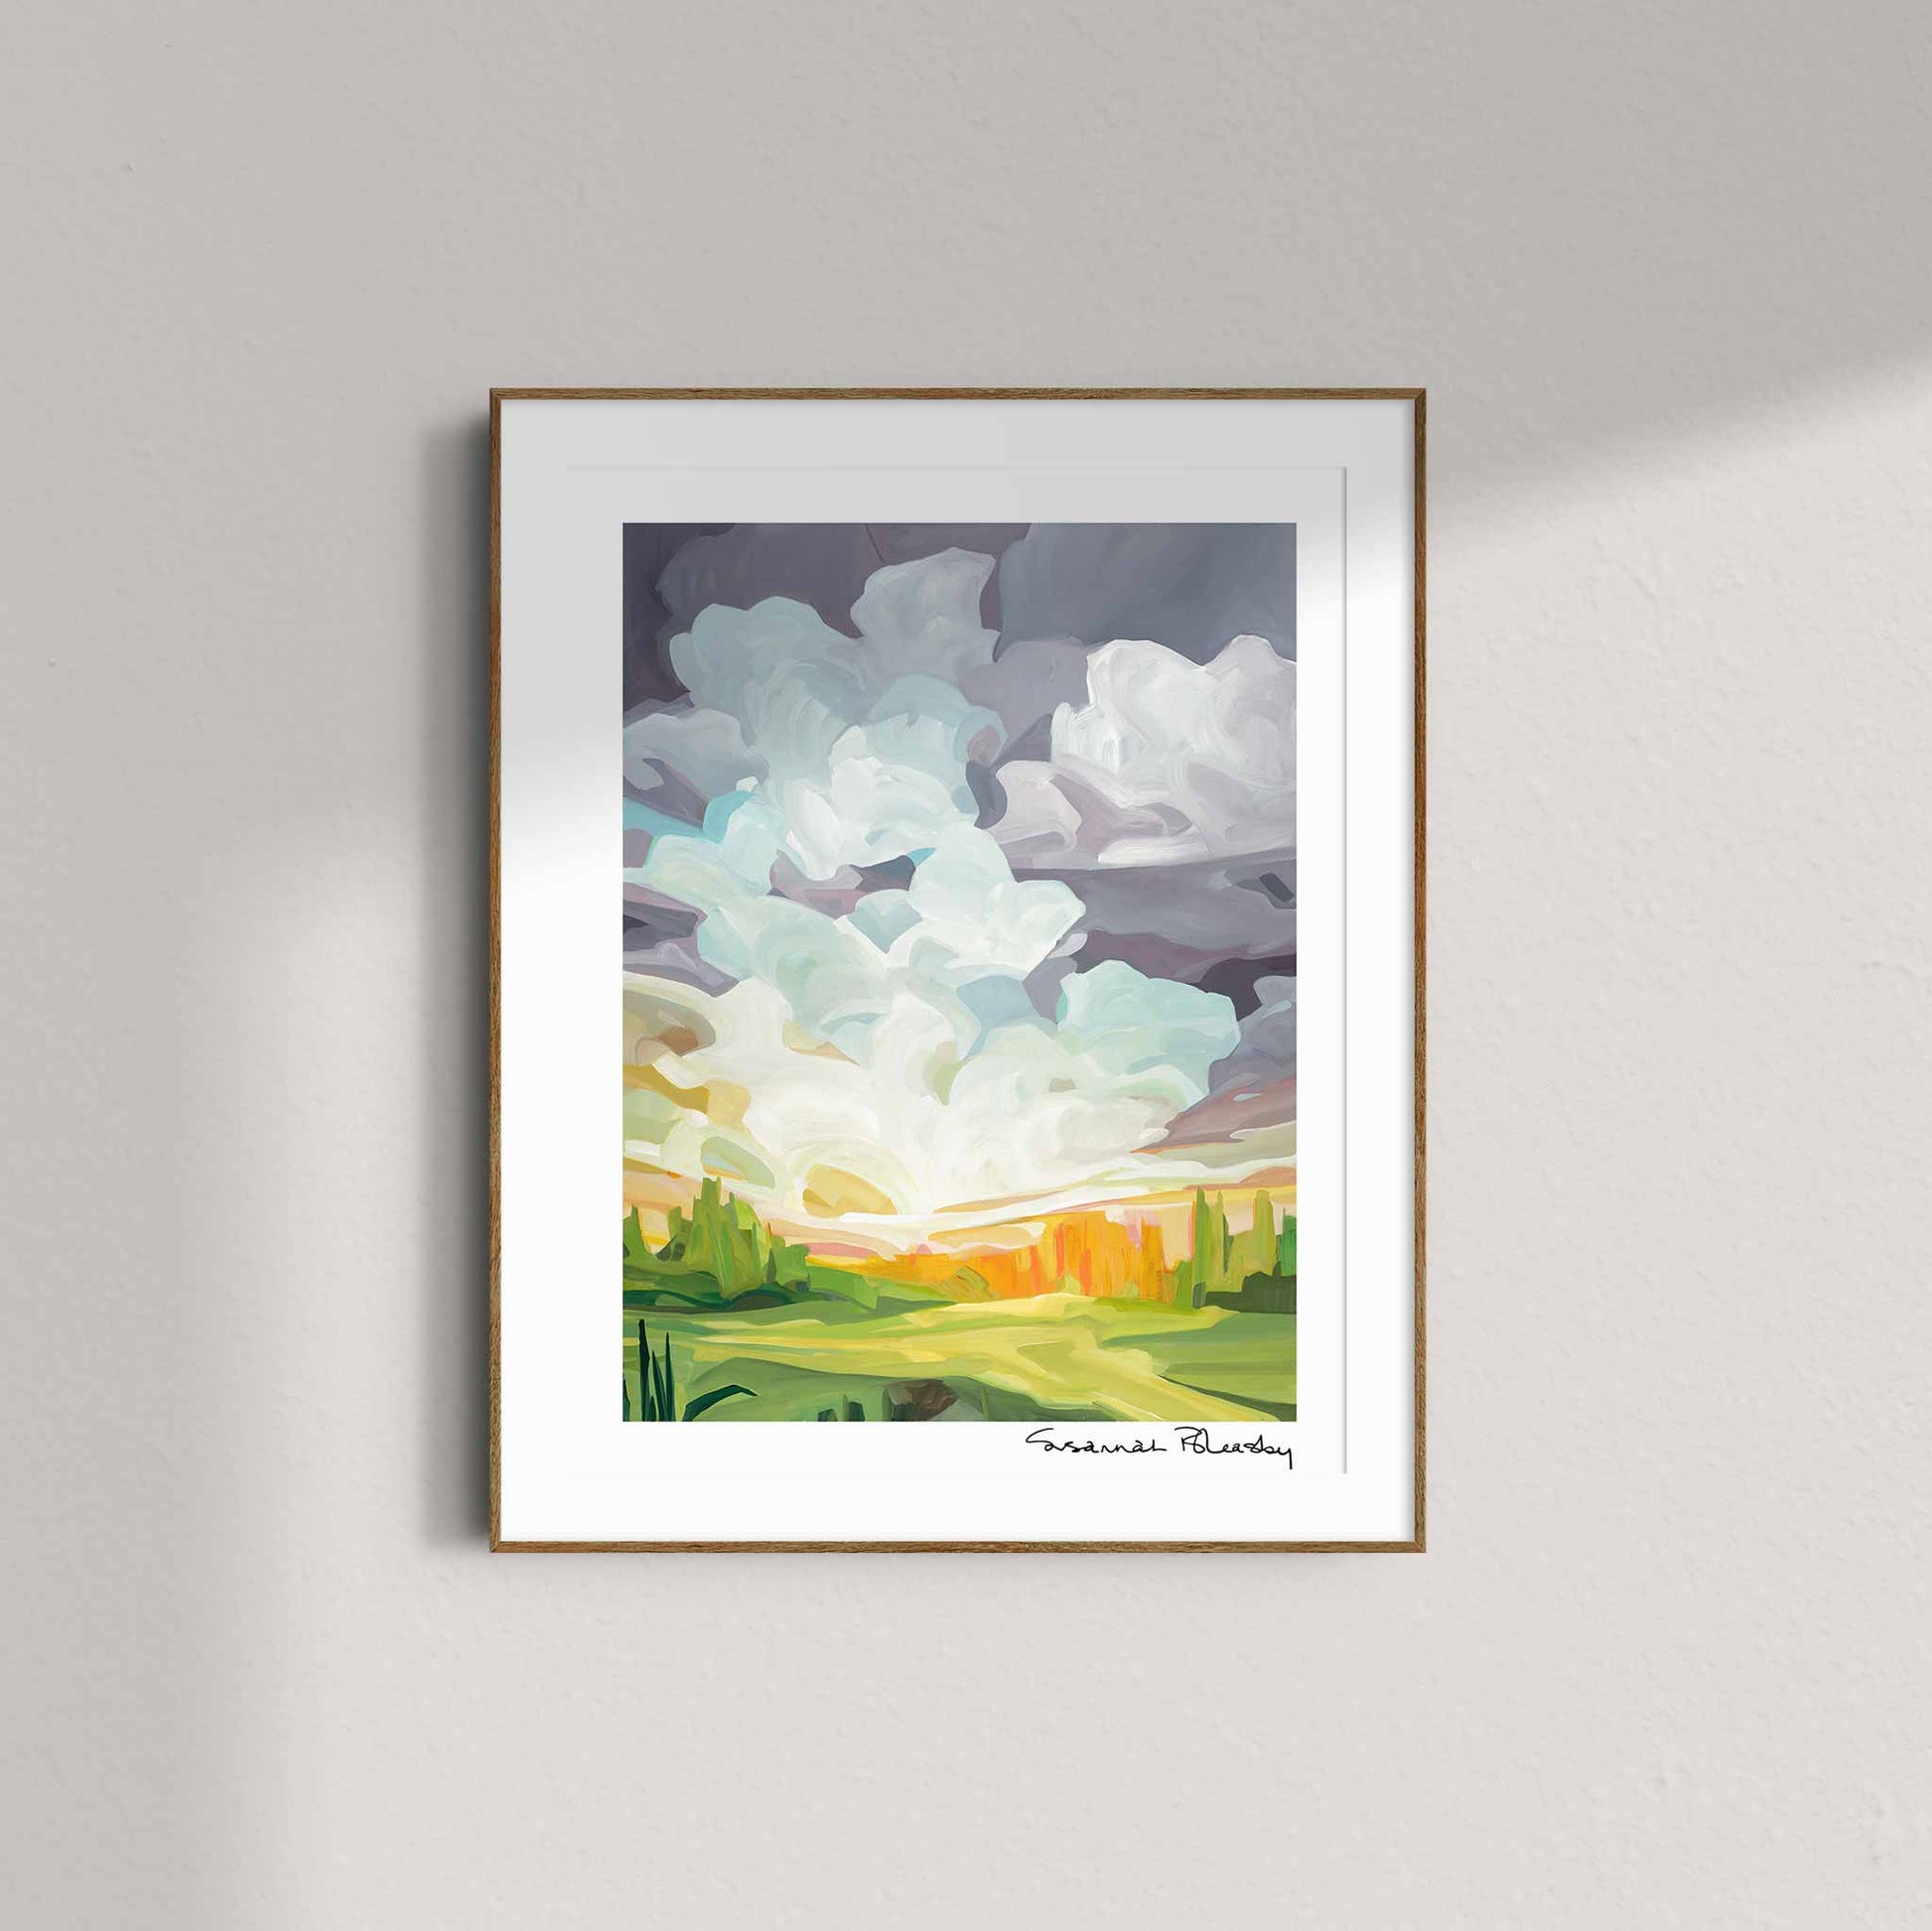 framed 8x10 art print of a mauve sunrise painting by Canadian artist Susannah Bleasby